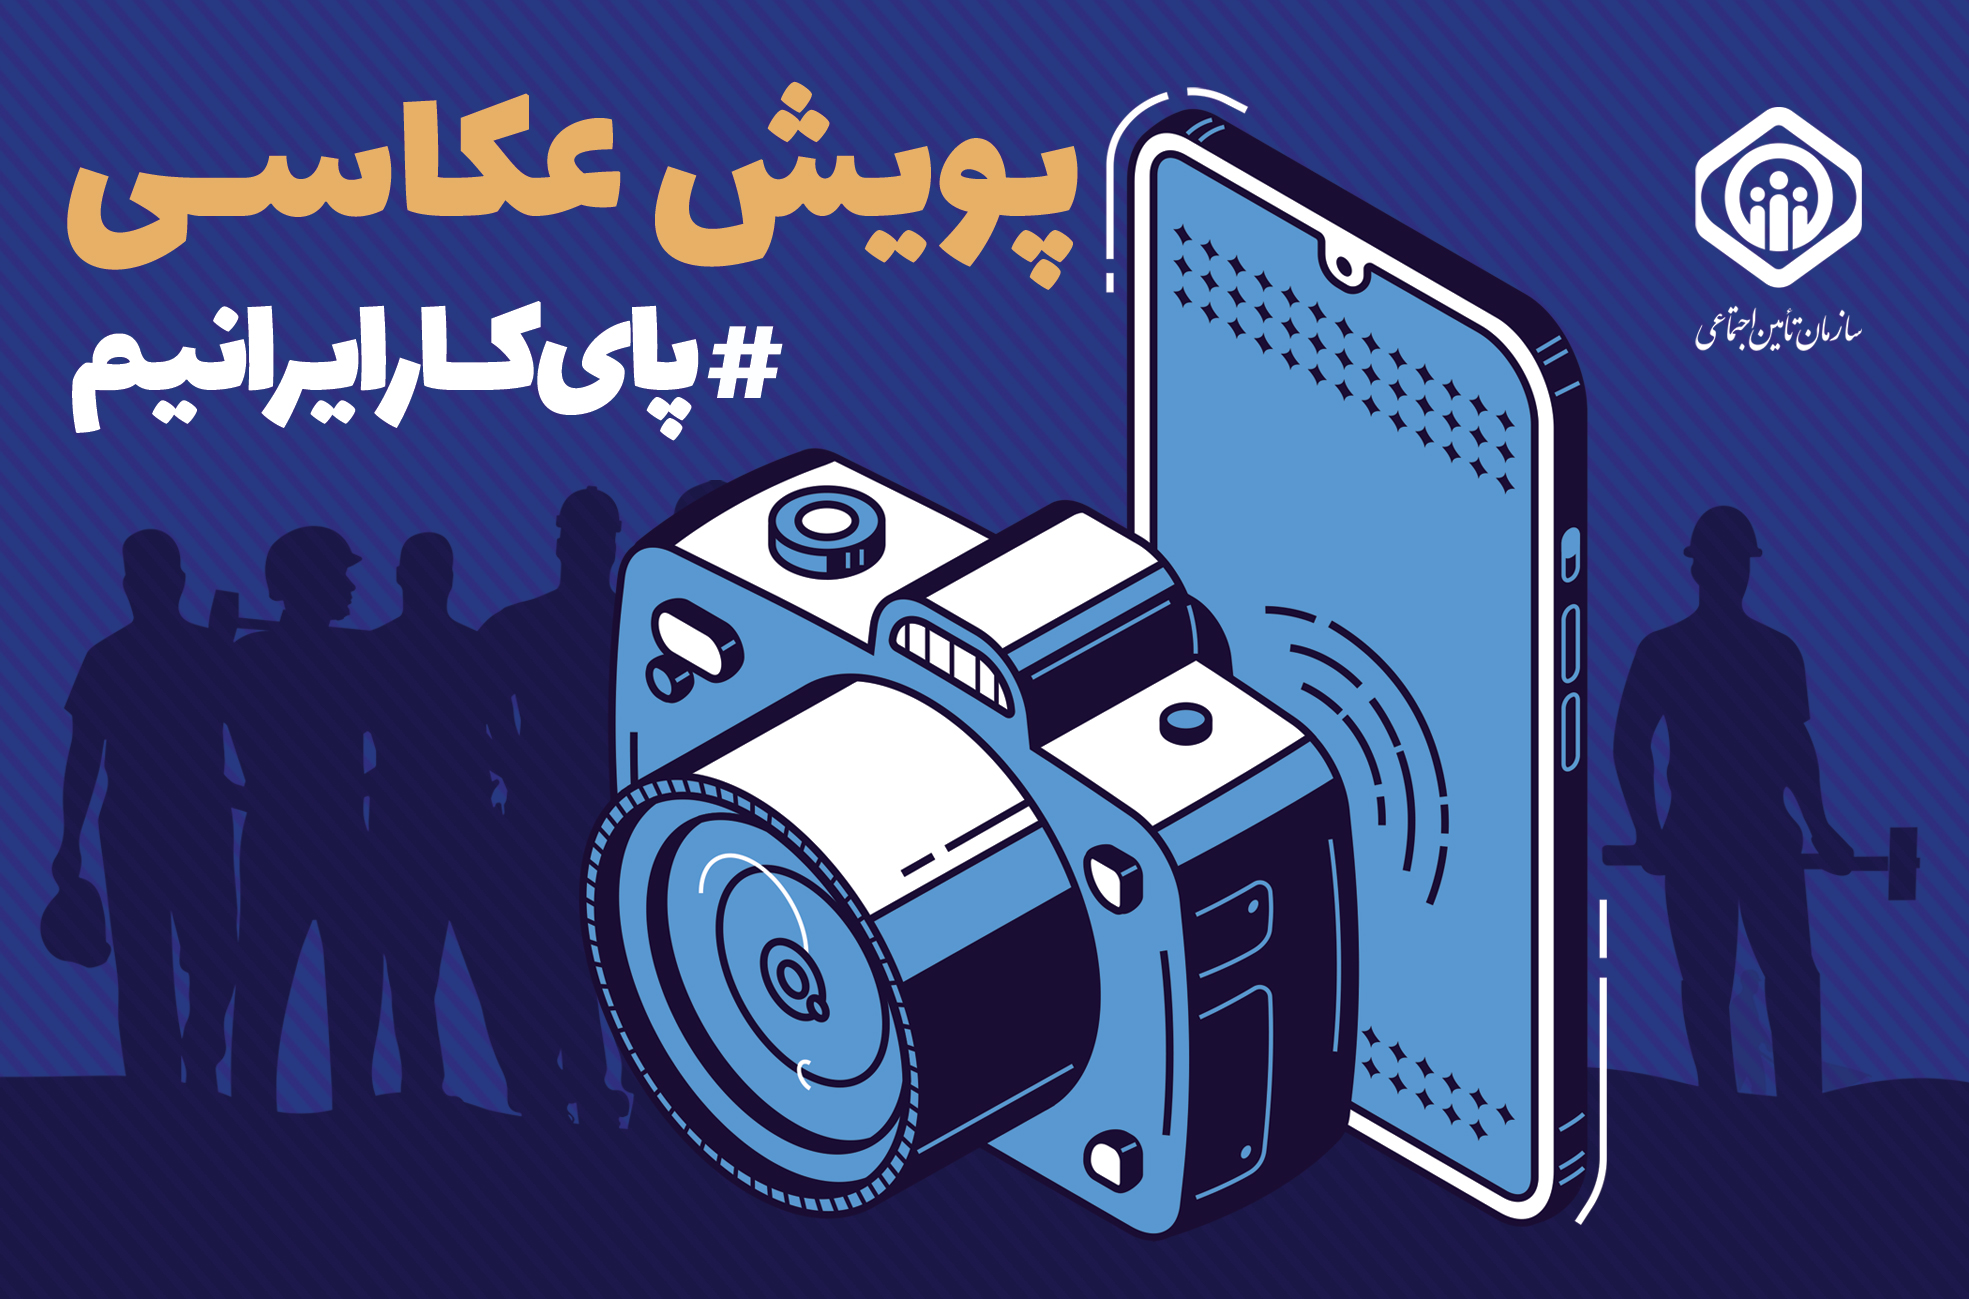 فراخوان پویش عکس کارگری با عنوان" پای کار ایرانیم"